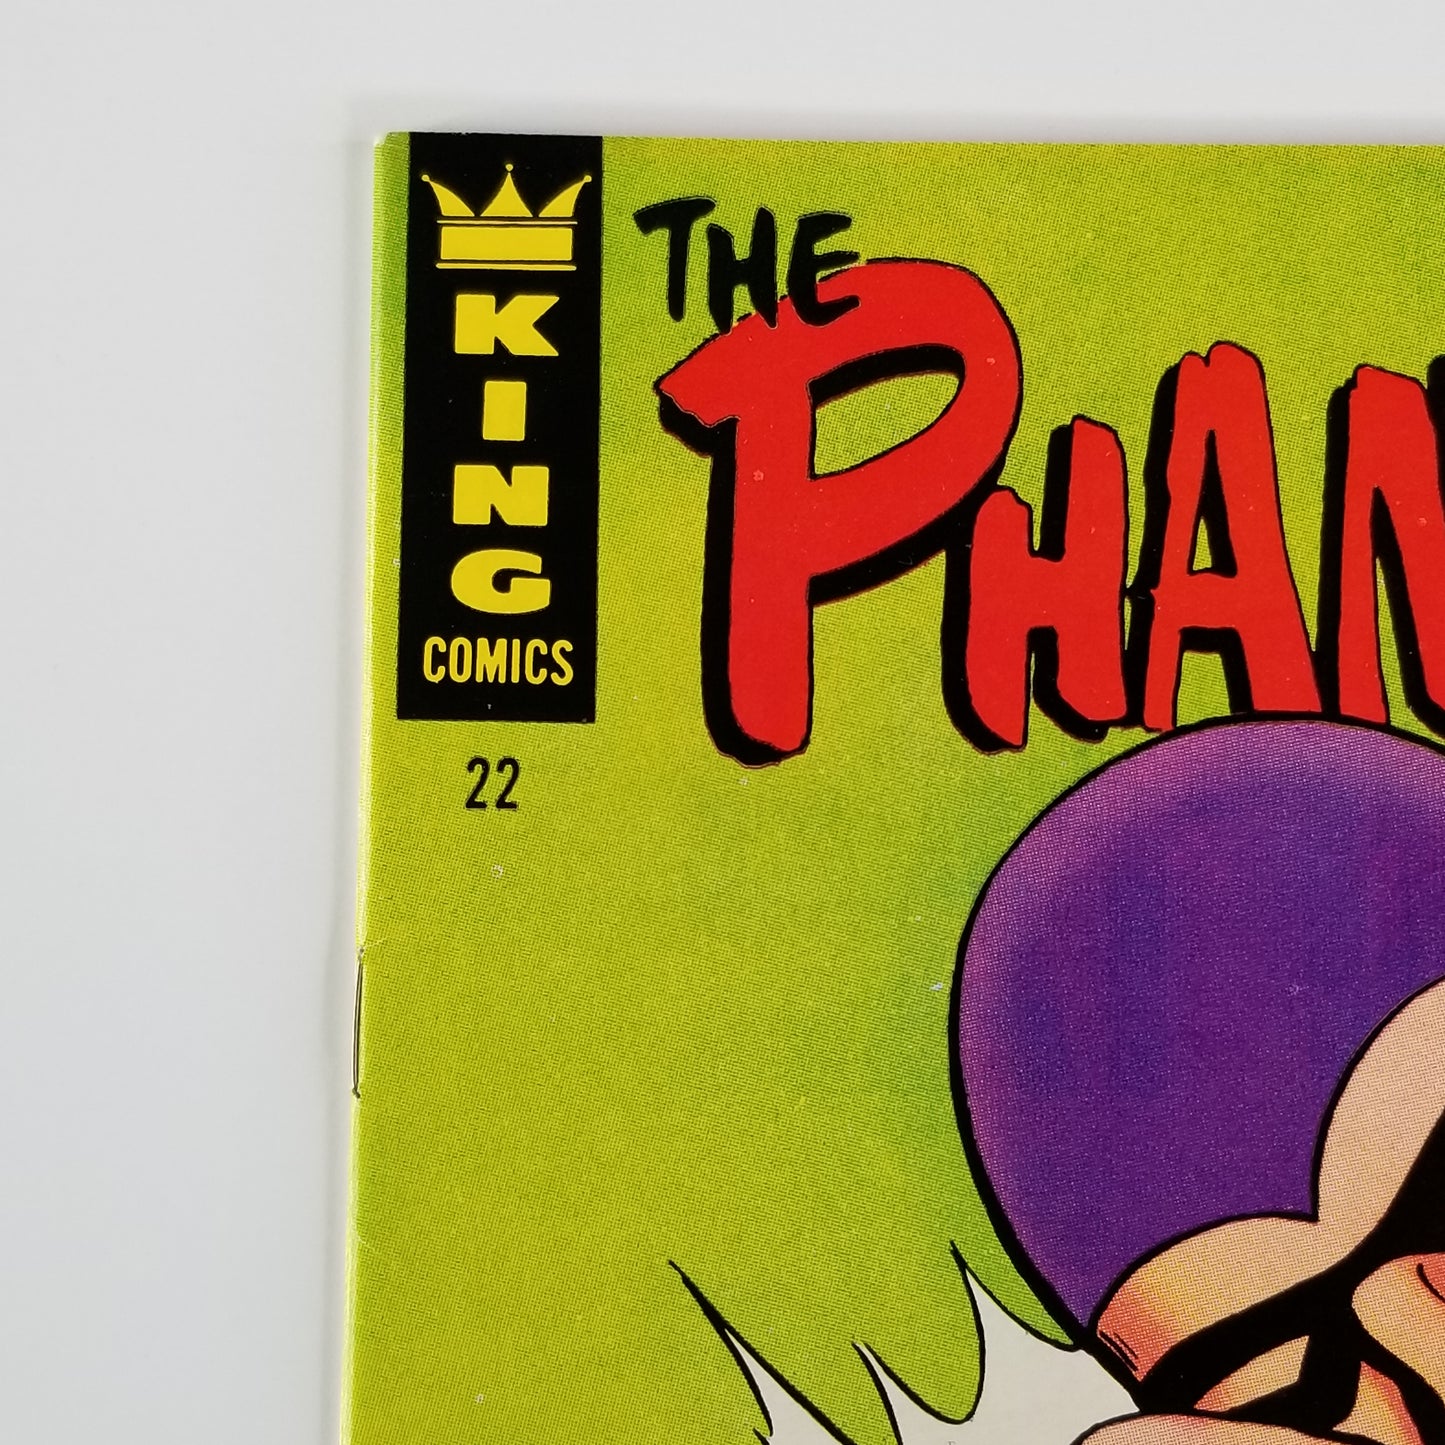 The Phantom (King Comics, 1962) #22